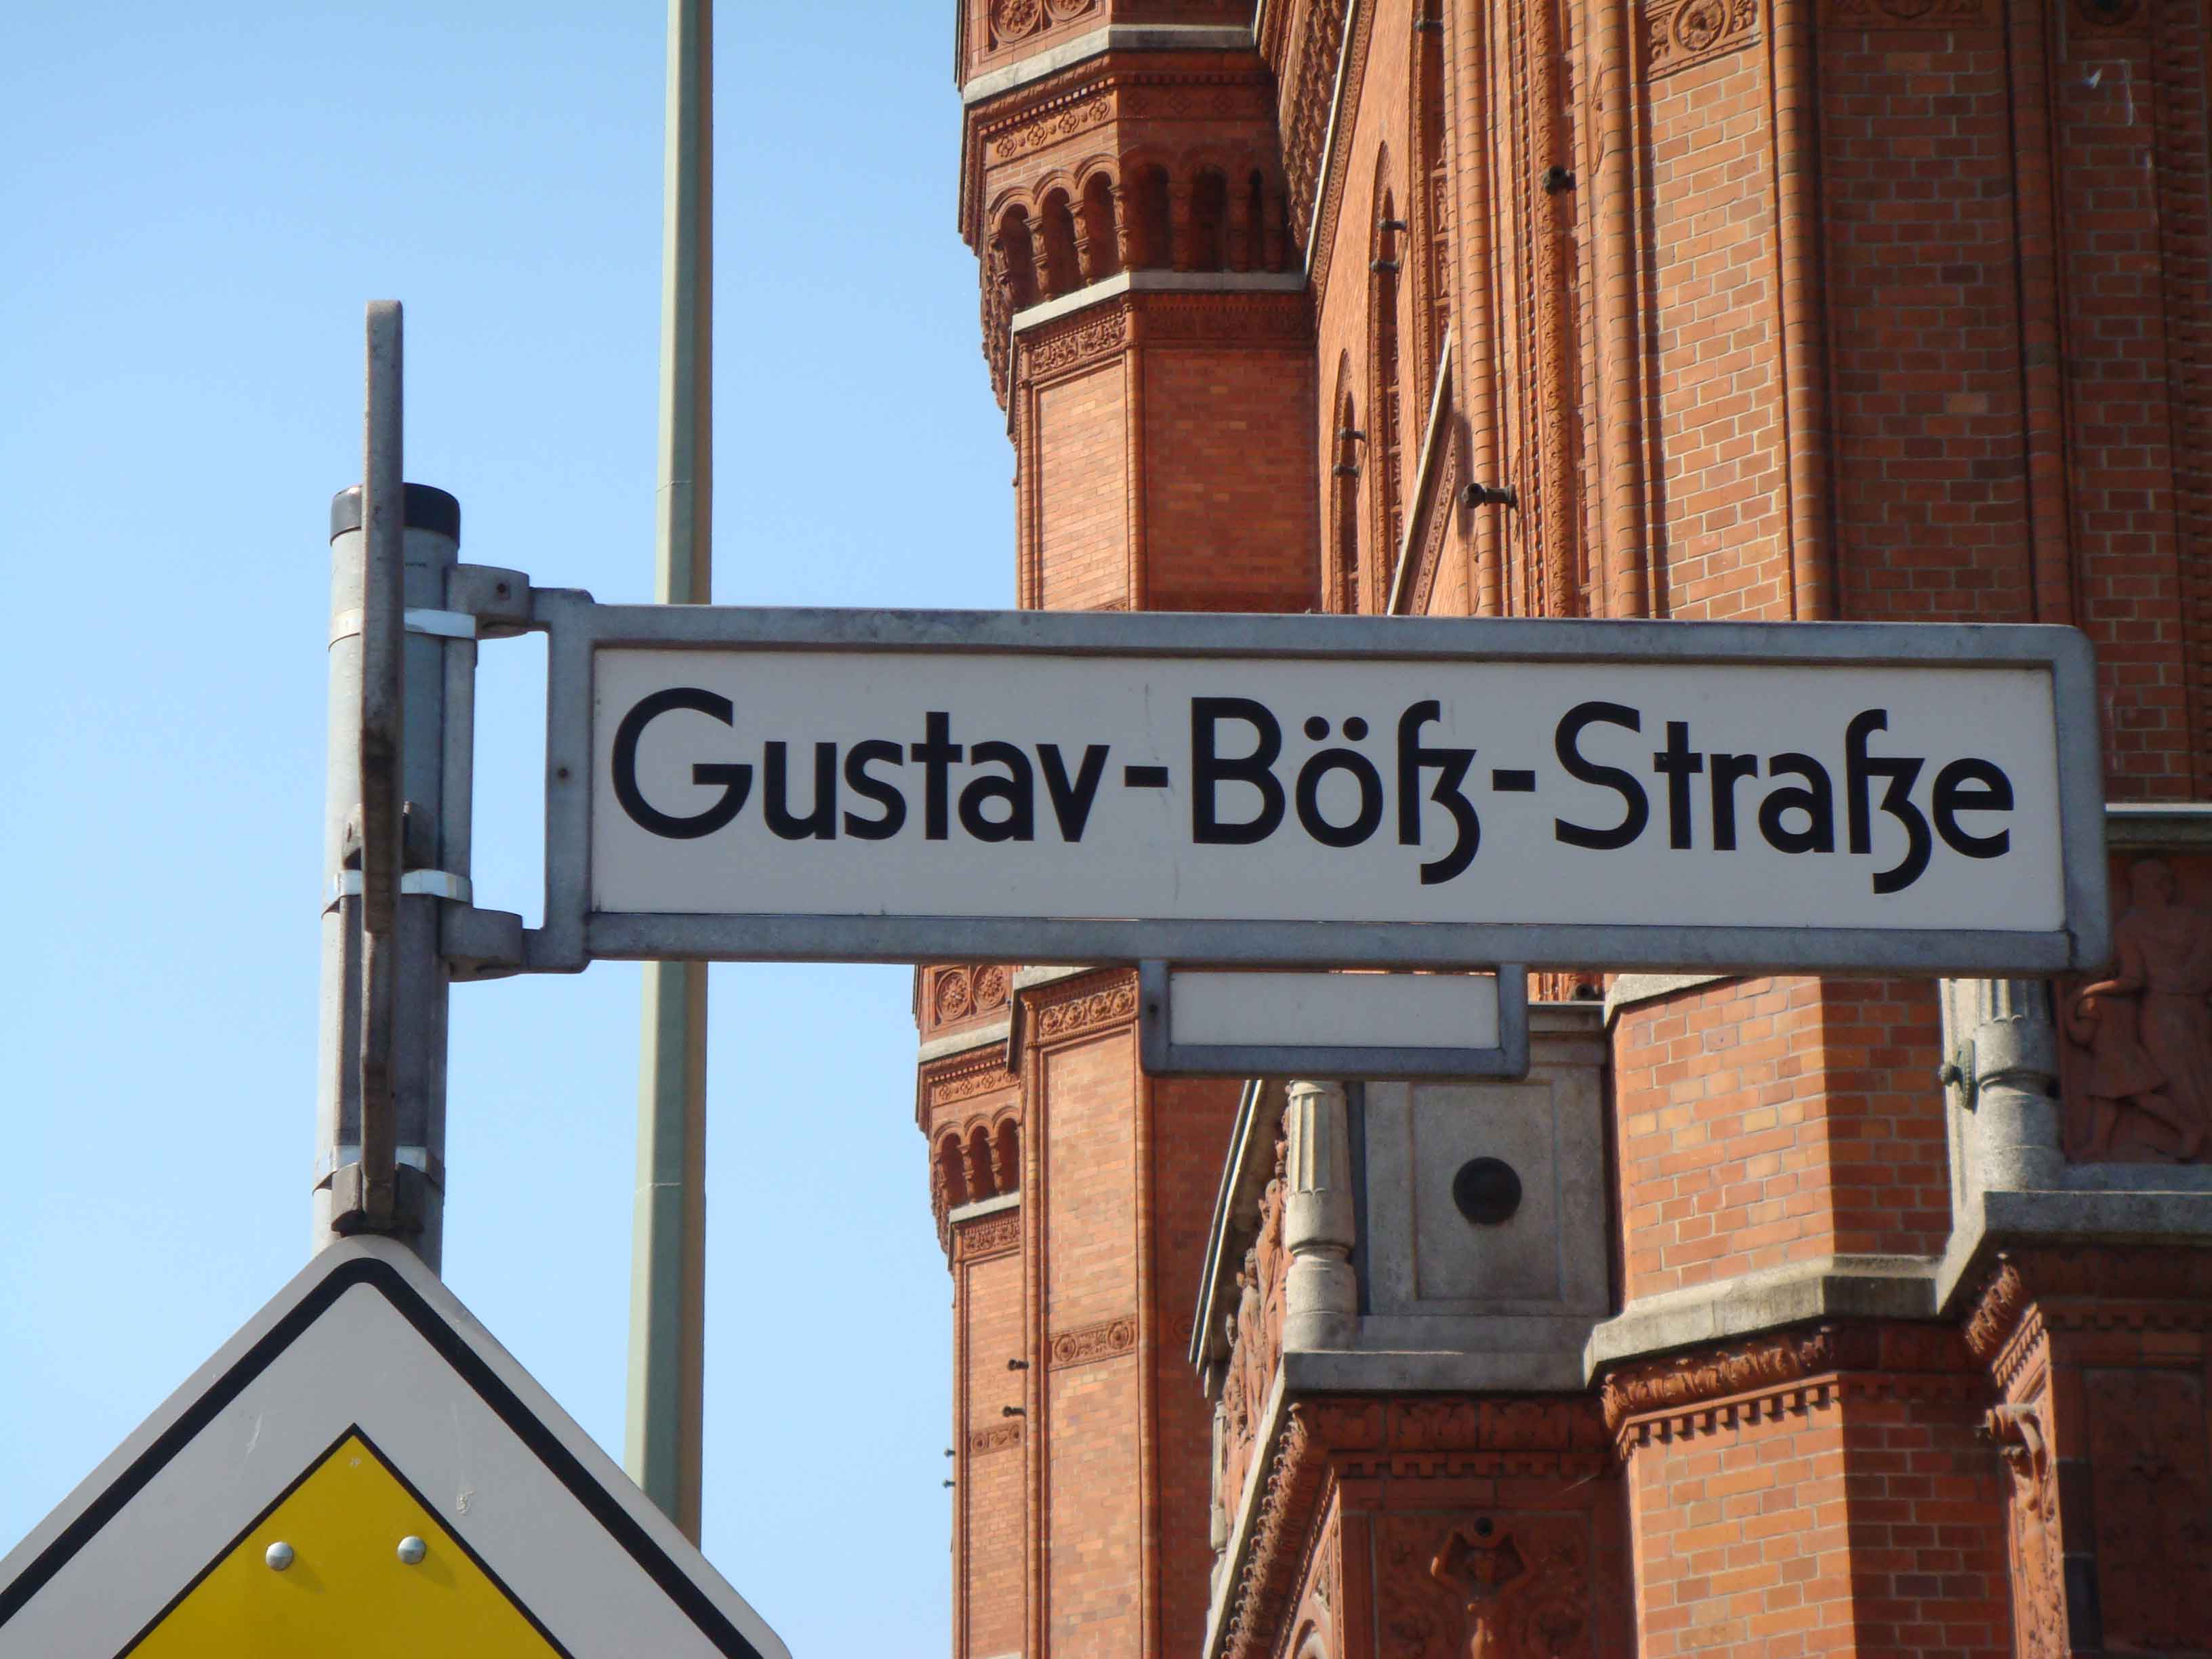 Berlin street sign